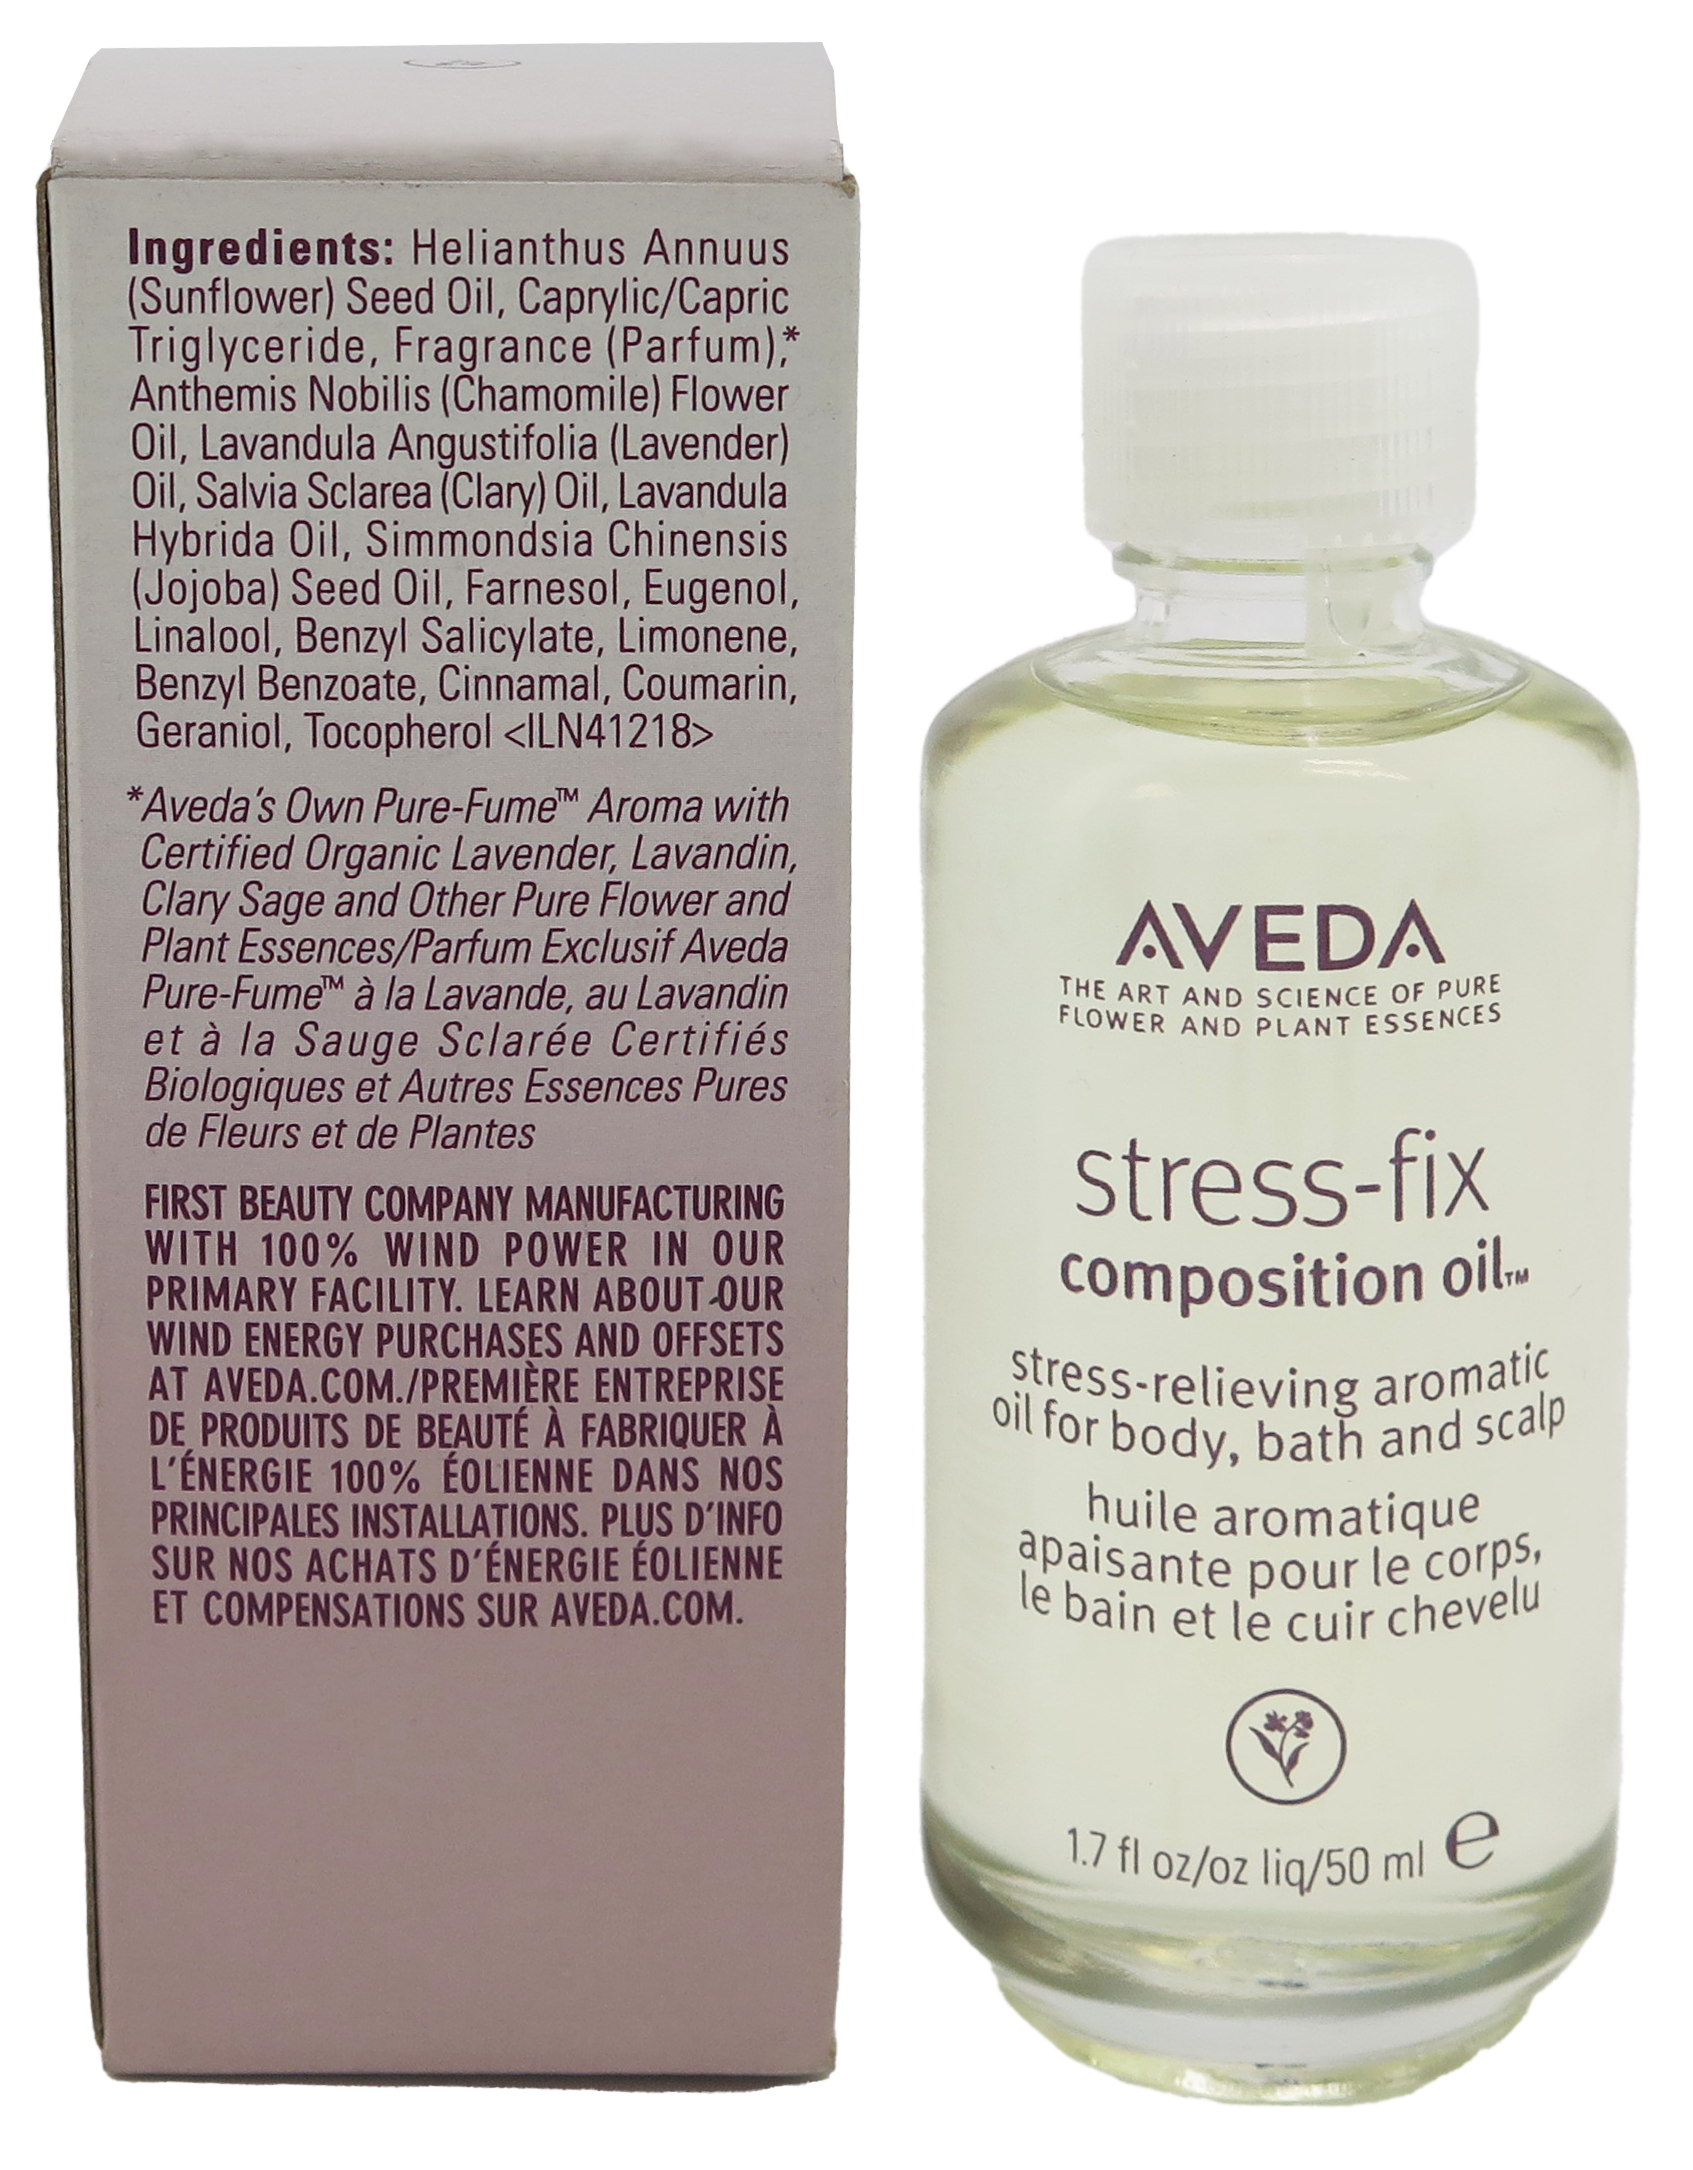 Aveda Stress-fix Composition Oil 1.7 Fl oz